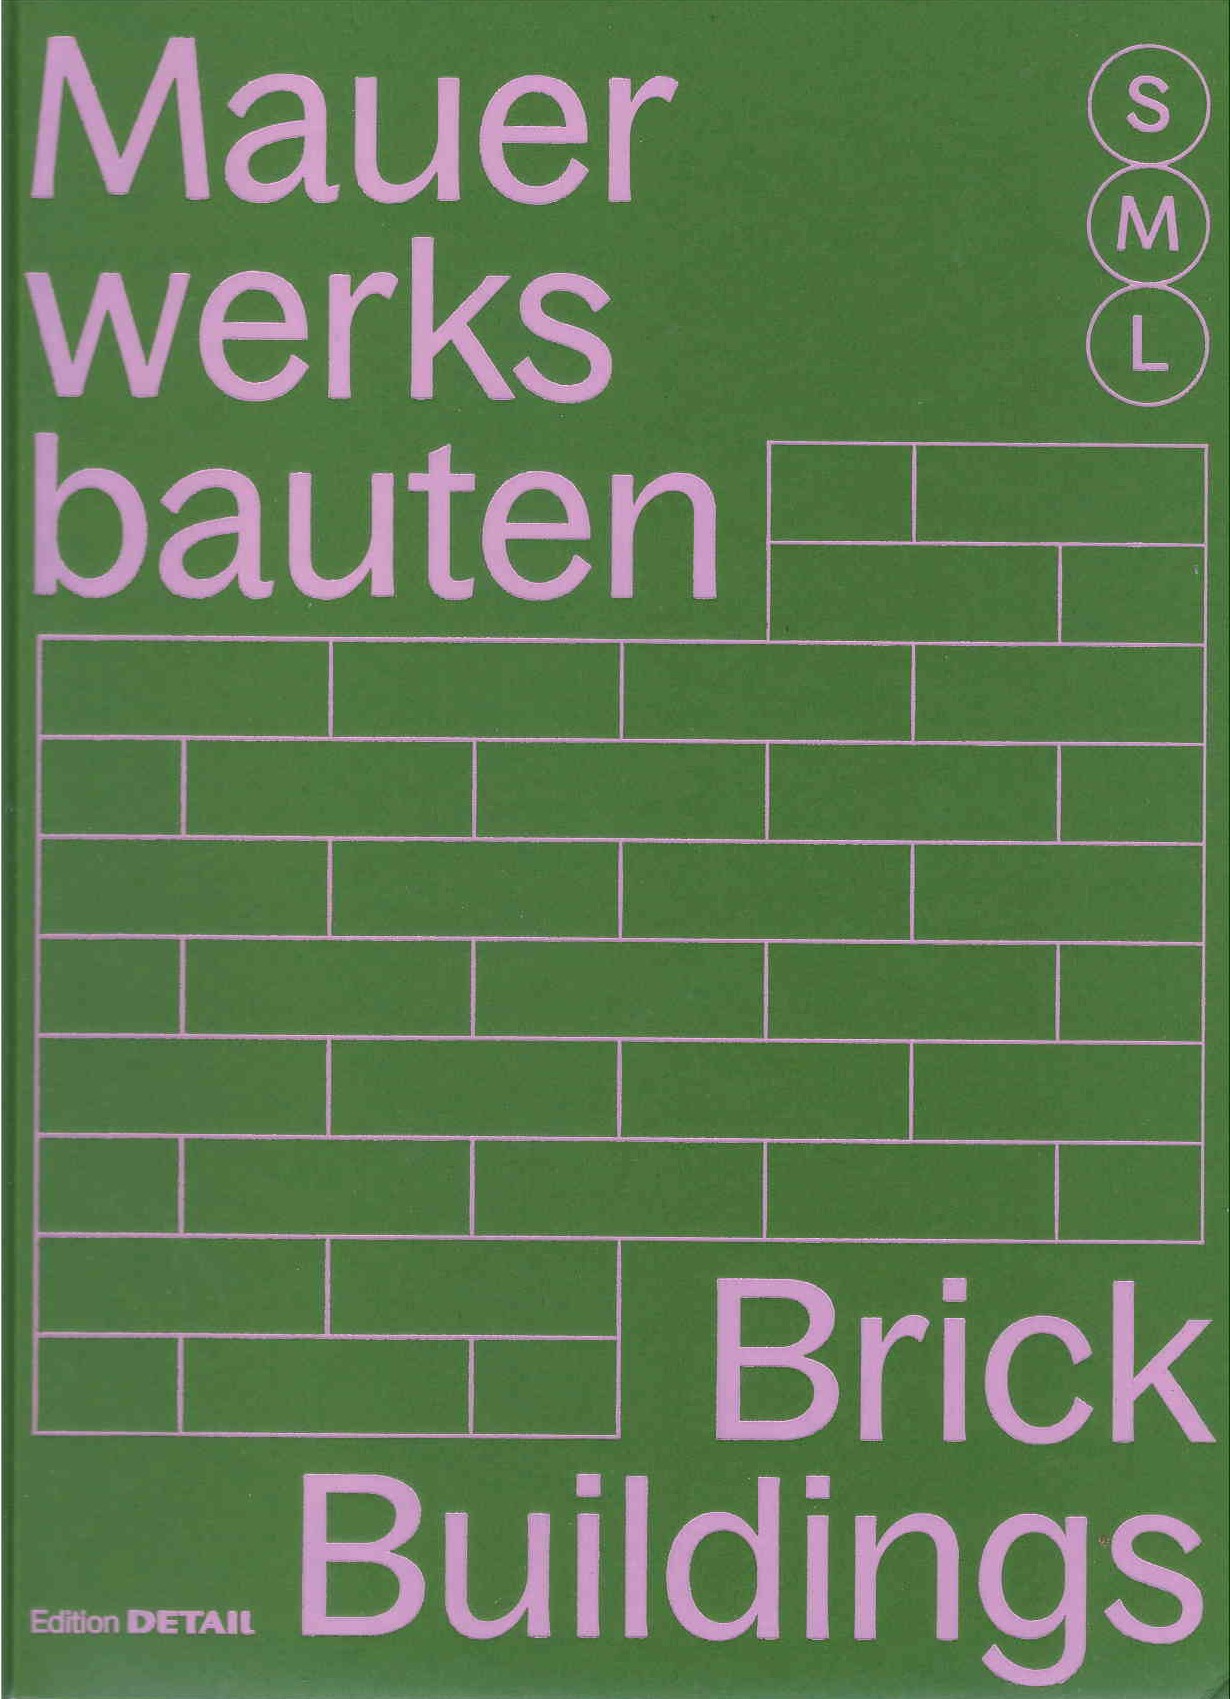 Brick buildings [S, M, L] : [30x architecture and construction]